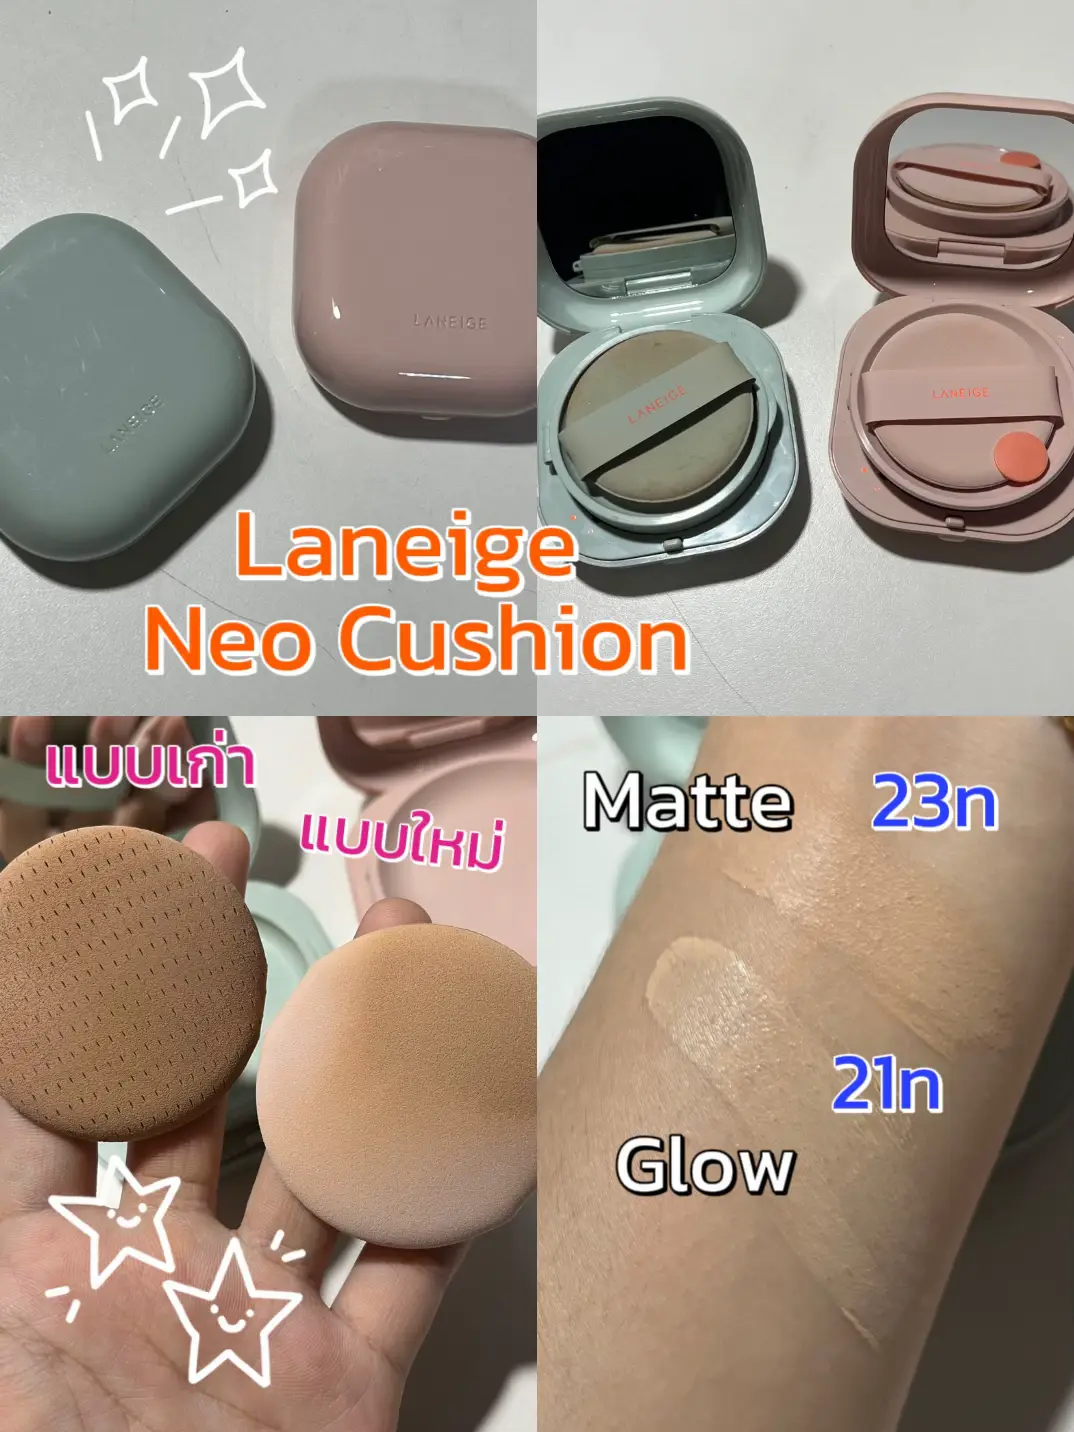 Laneige Neo Cushion : Glow vs Matte